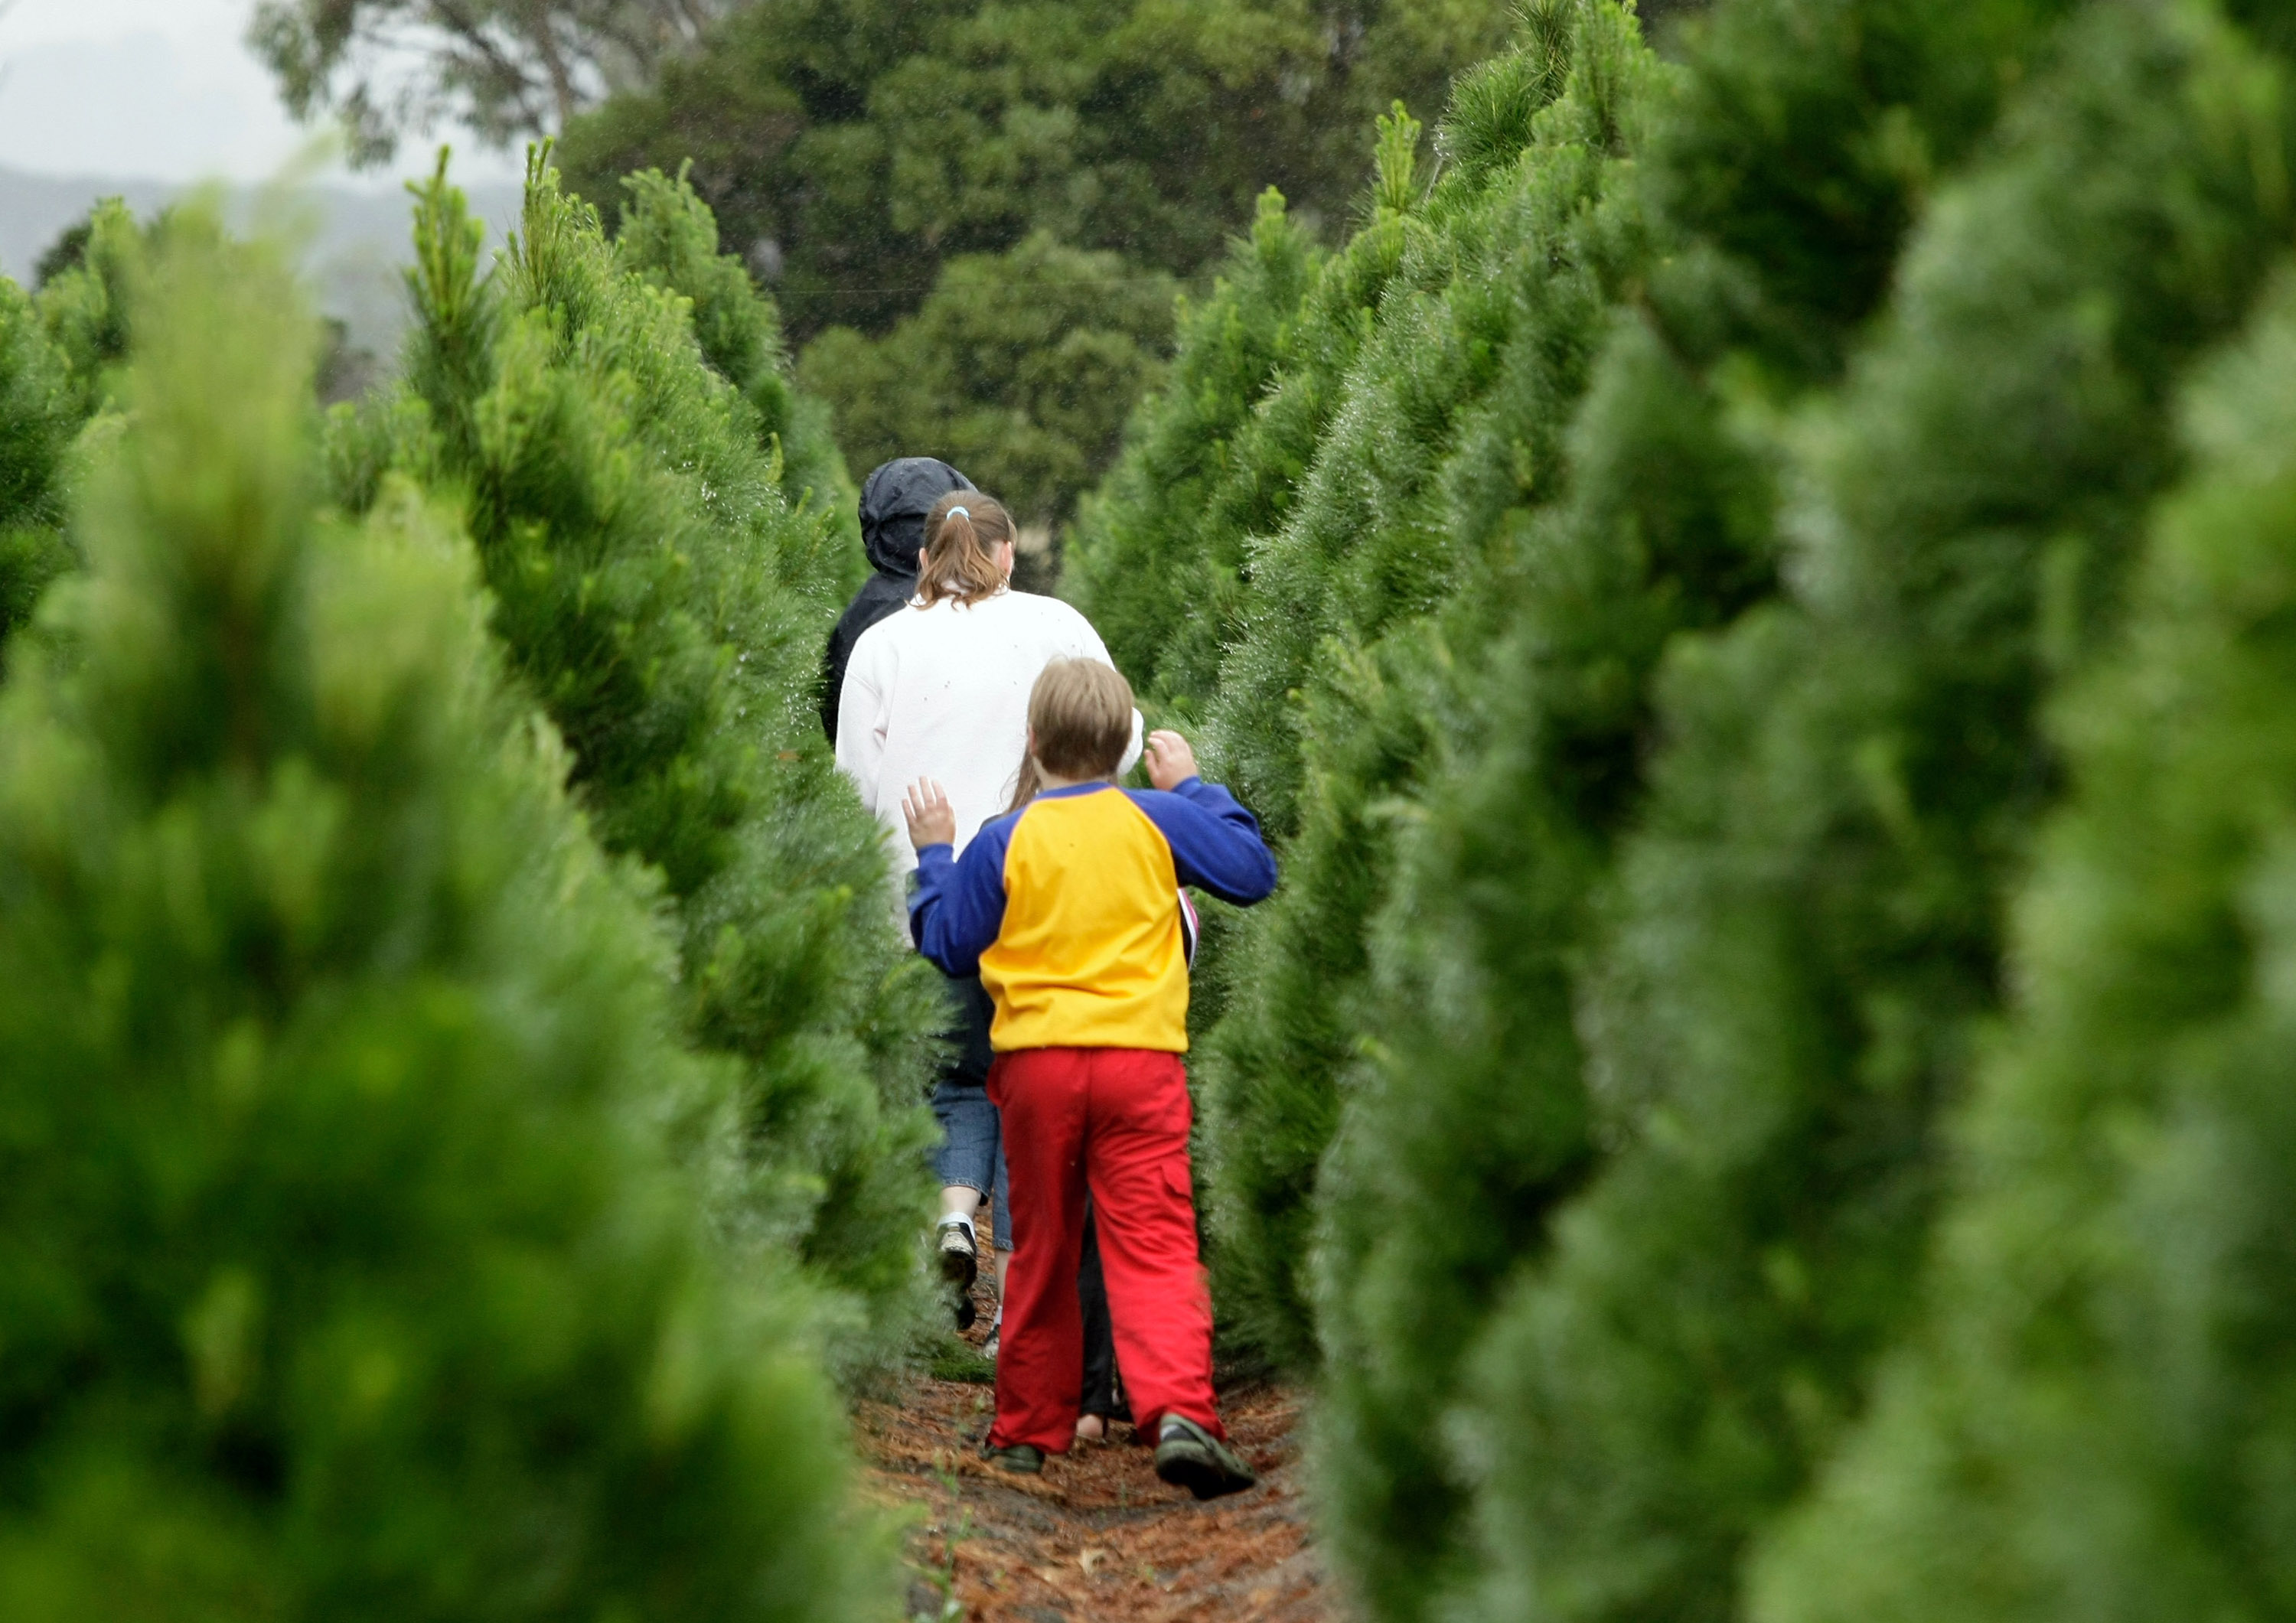 Bucks County Christmas Tree Farms - Paul Rosso